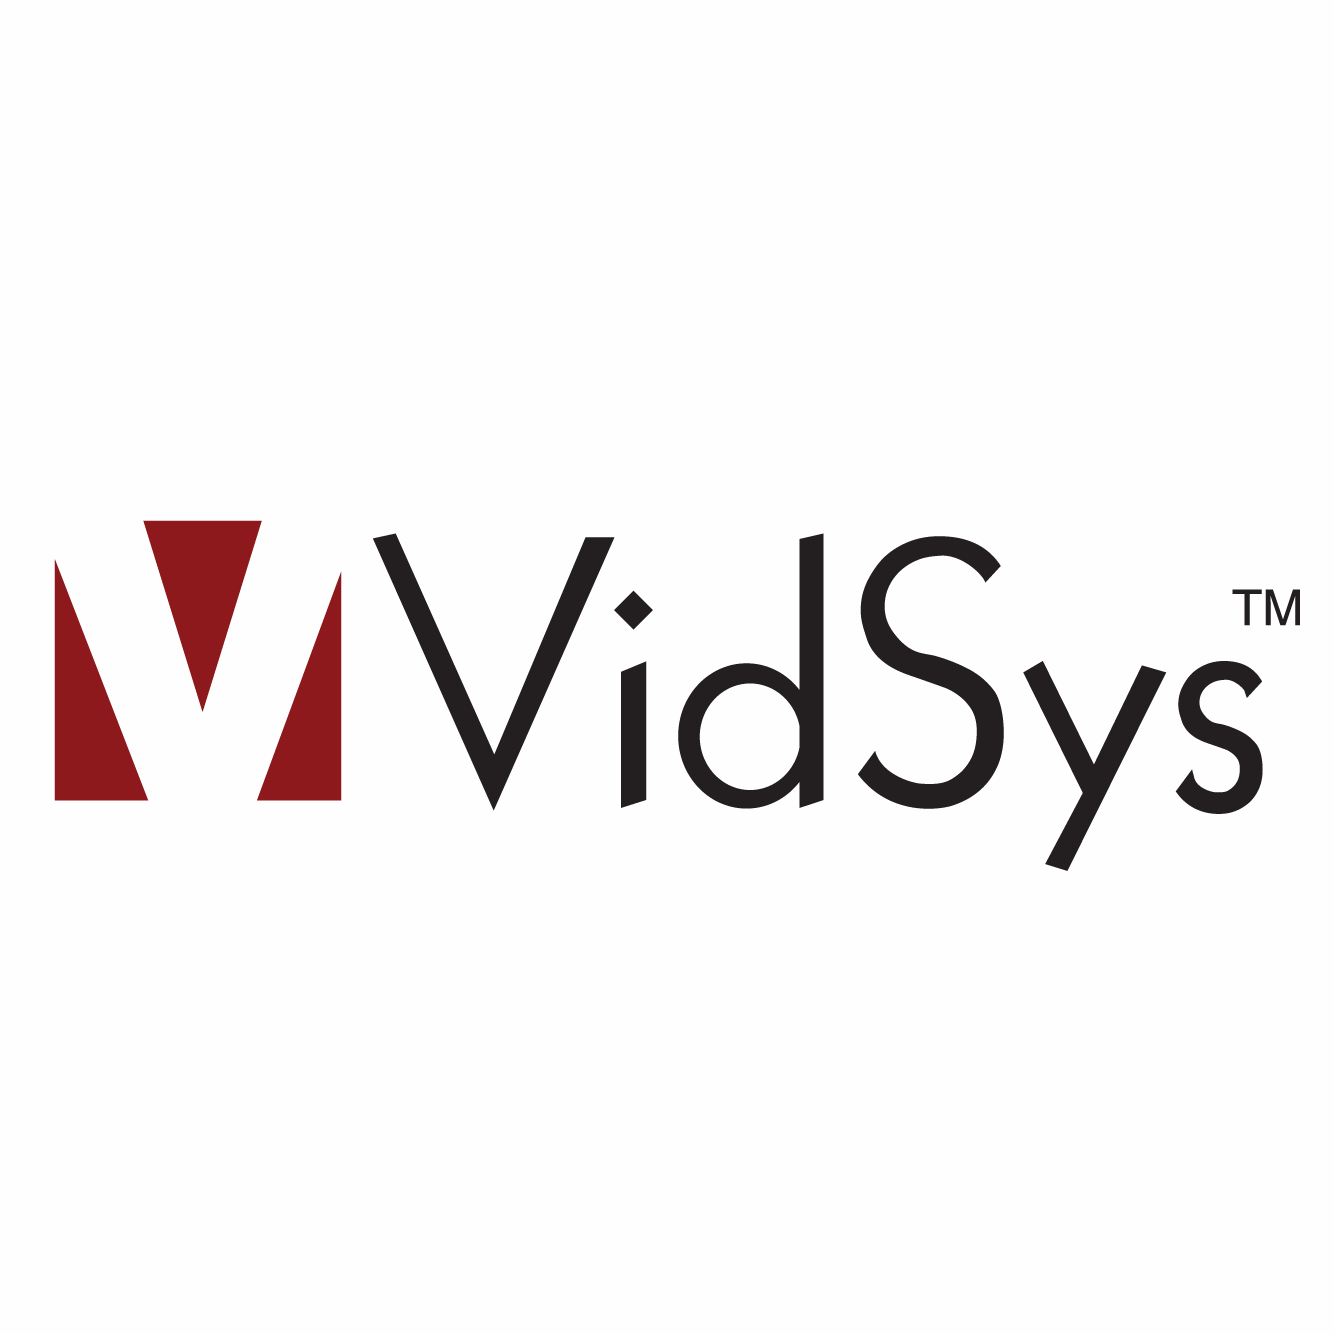 https://securetech.local/wp-content/uploads/2019/02/14.VIDSYS.png